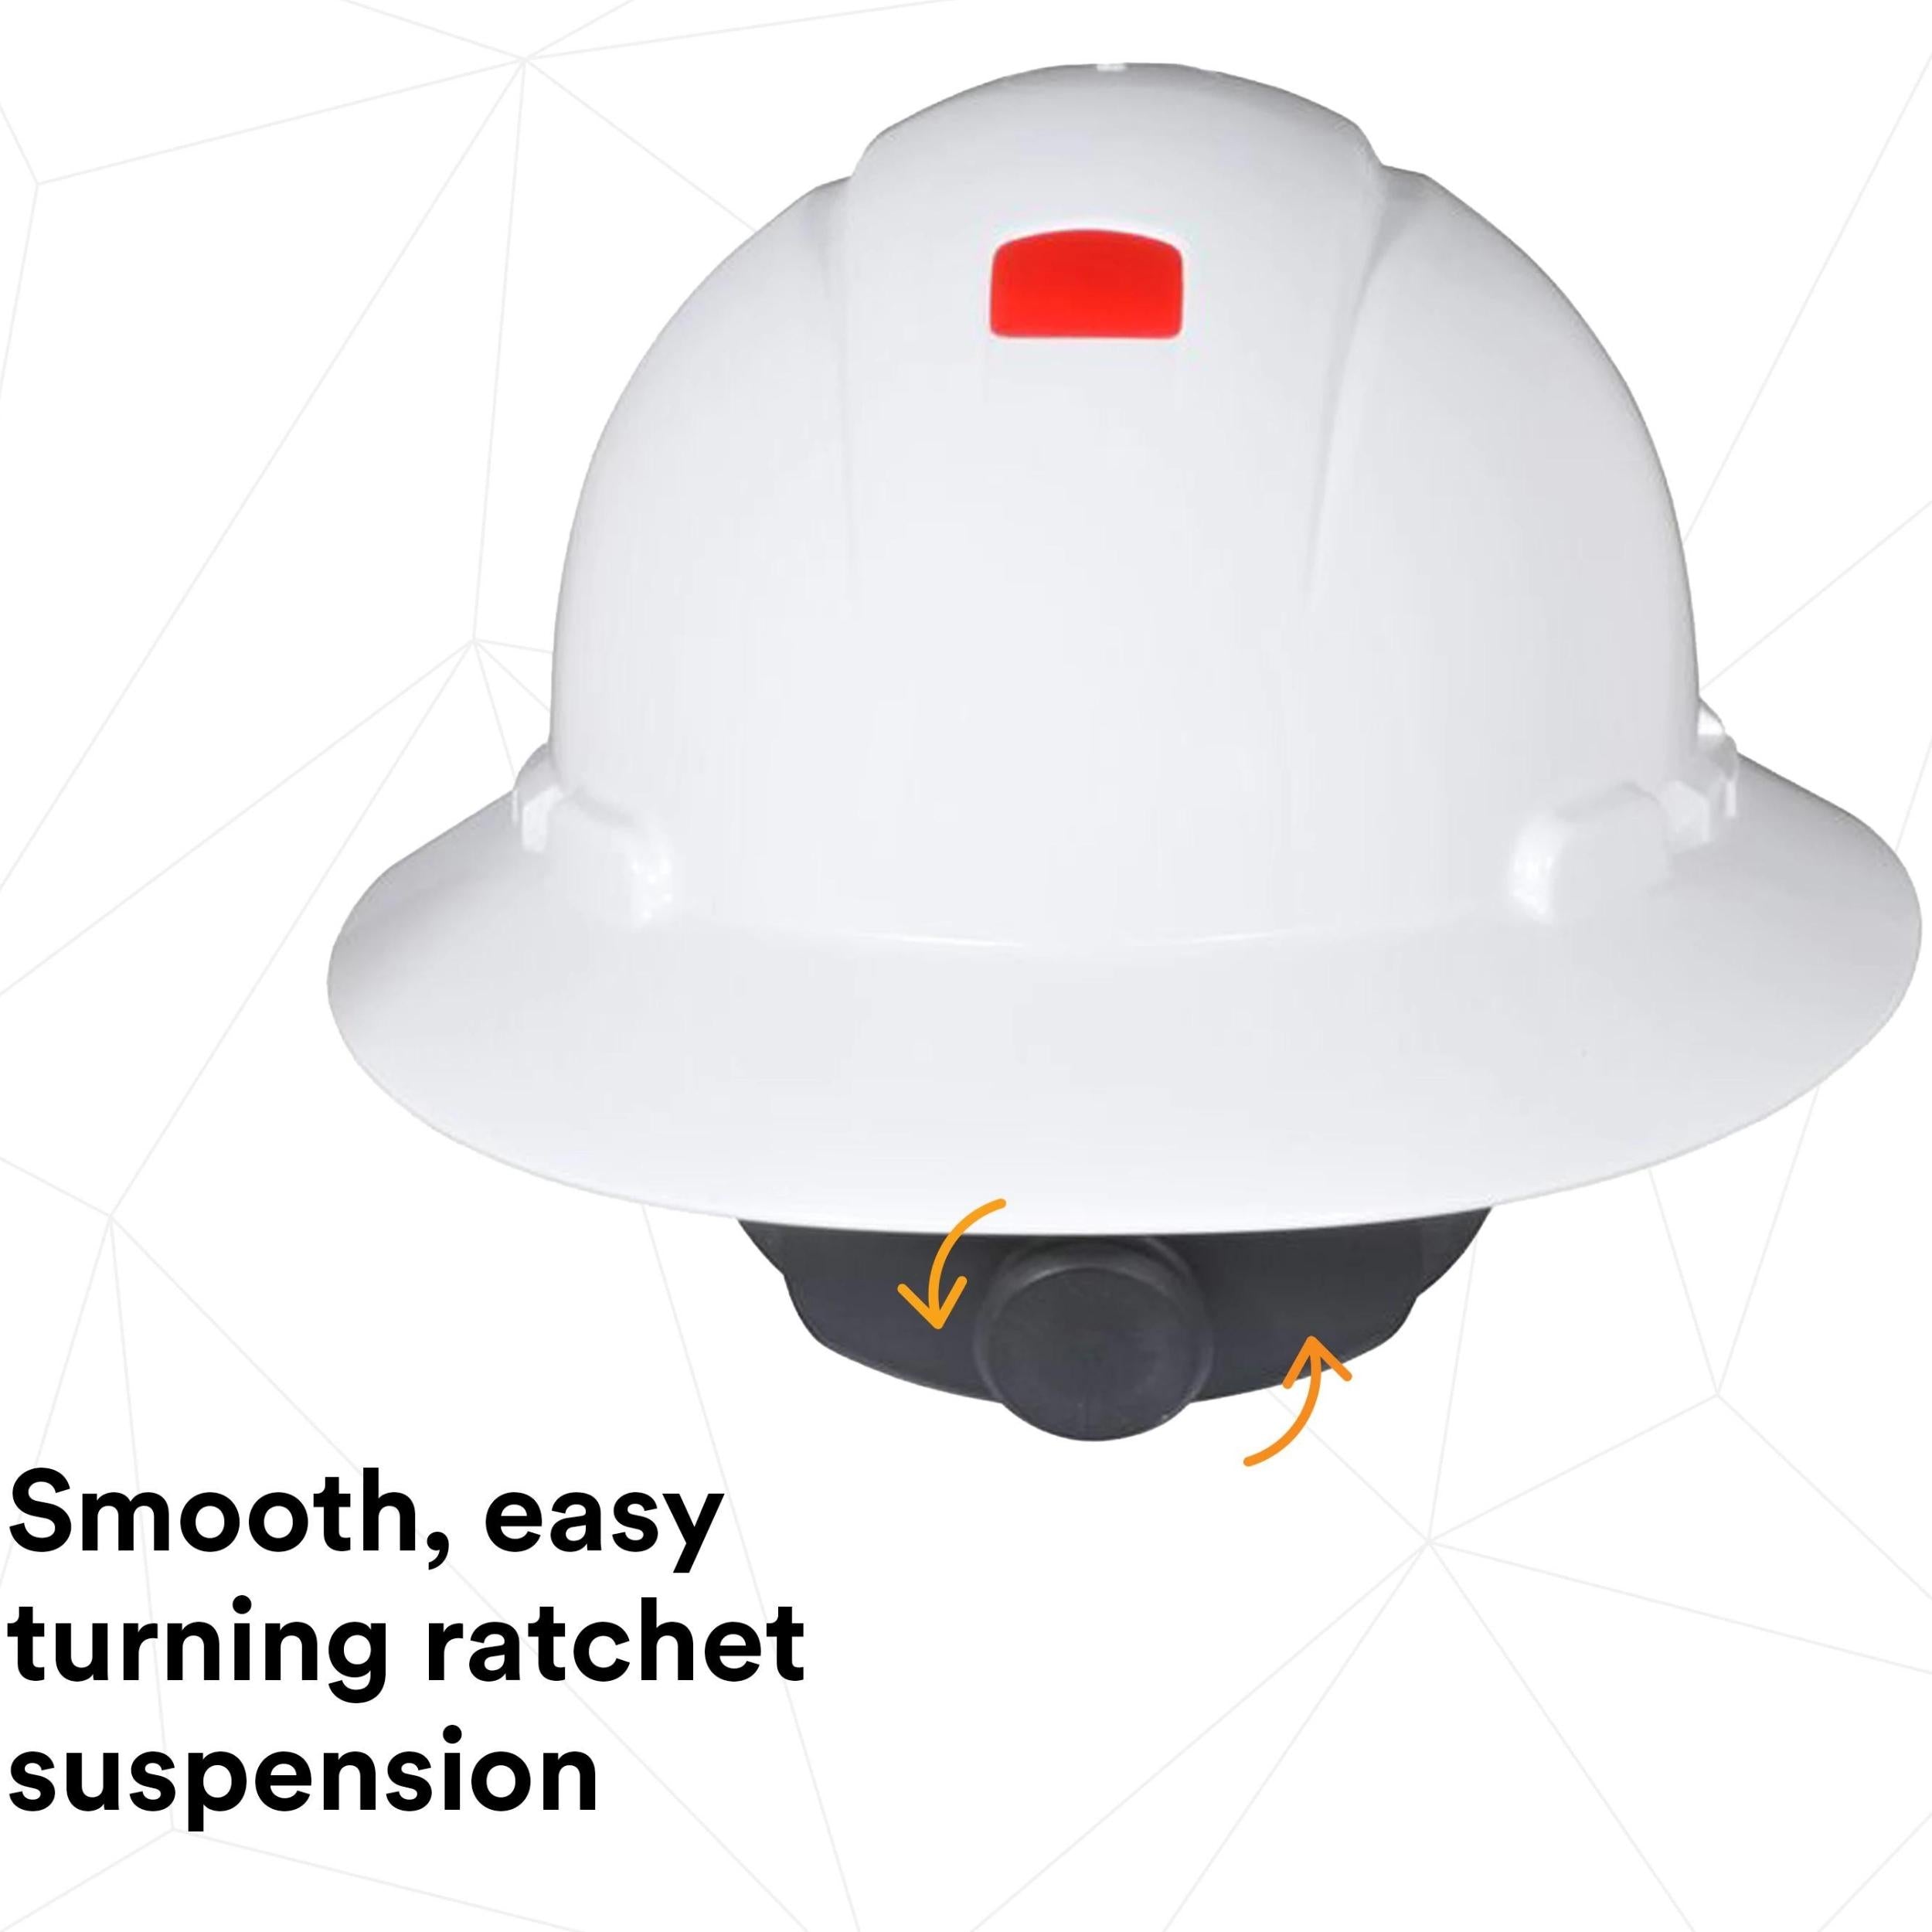 3M™ Full Brim Hard Hat H-801R-UV, White 4-Point Ratchet Suspension, with Uvicator